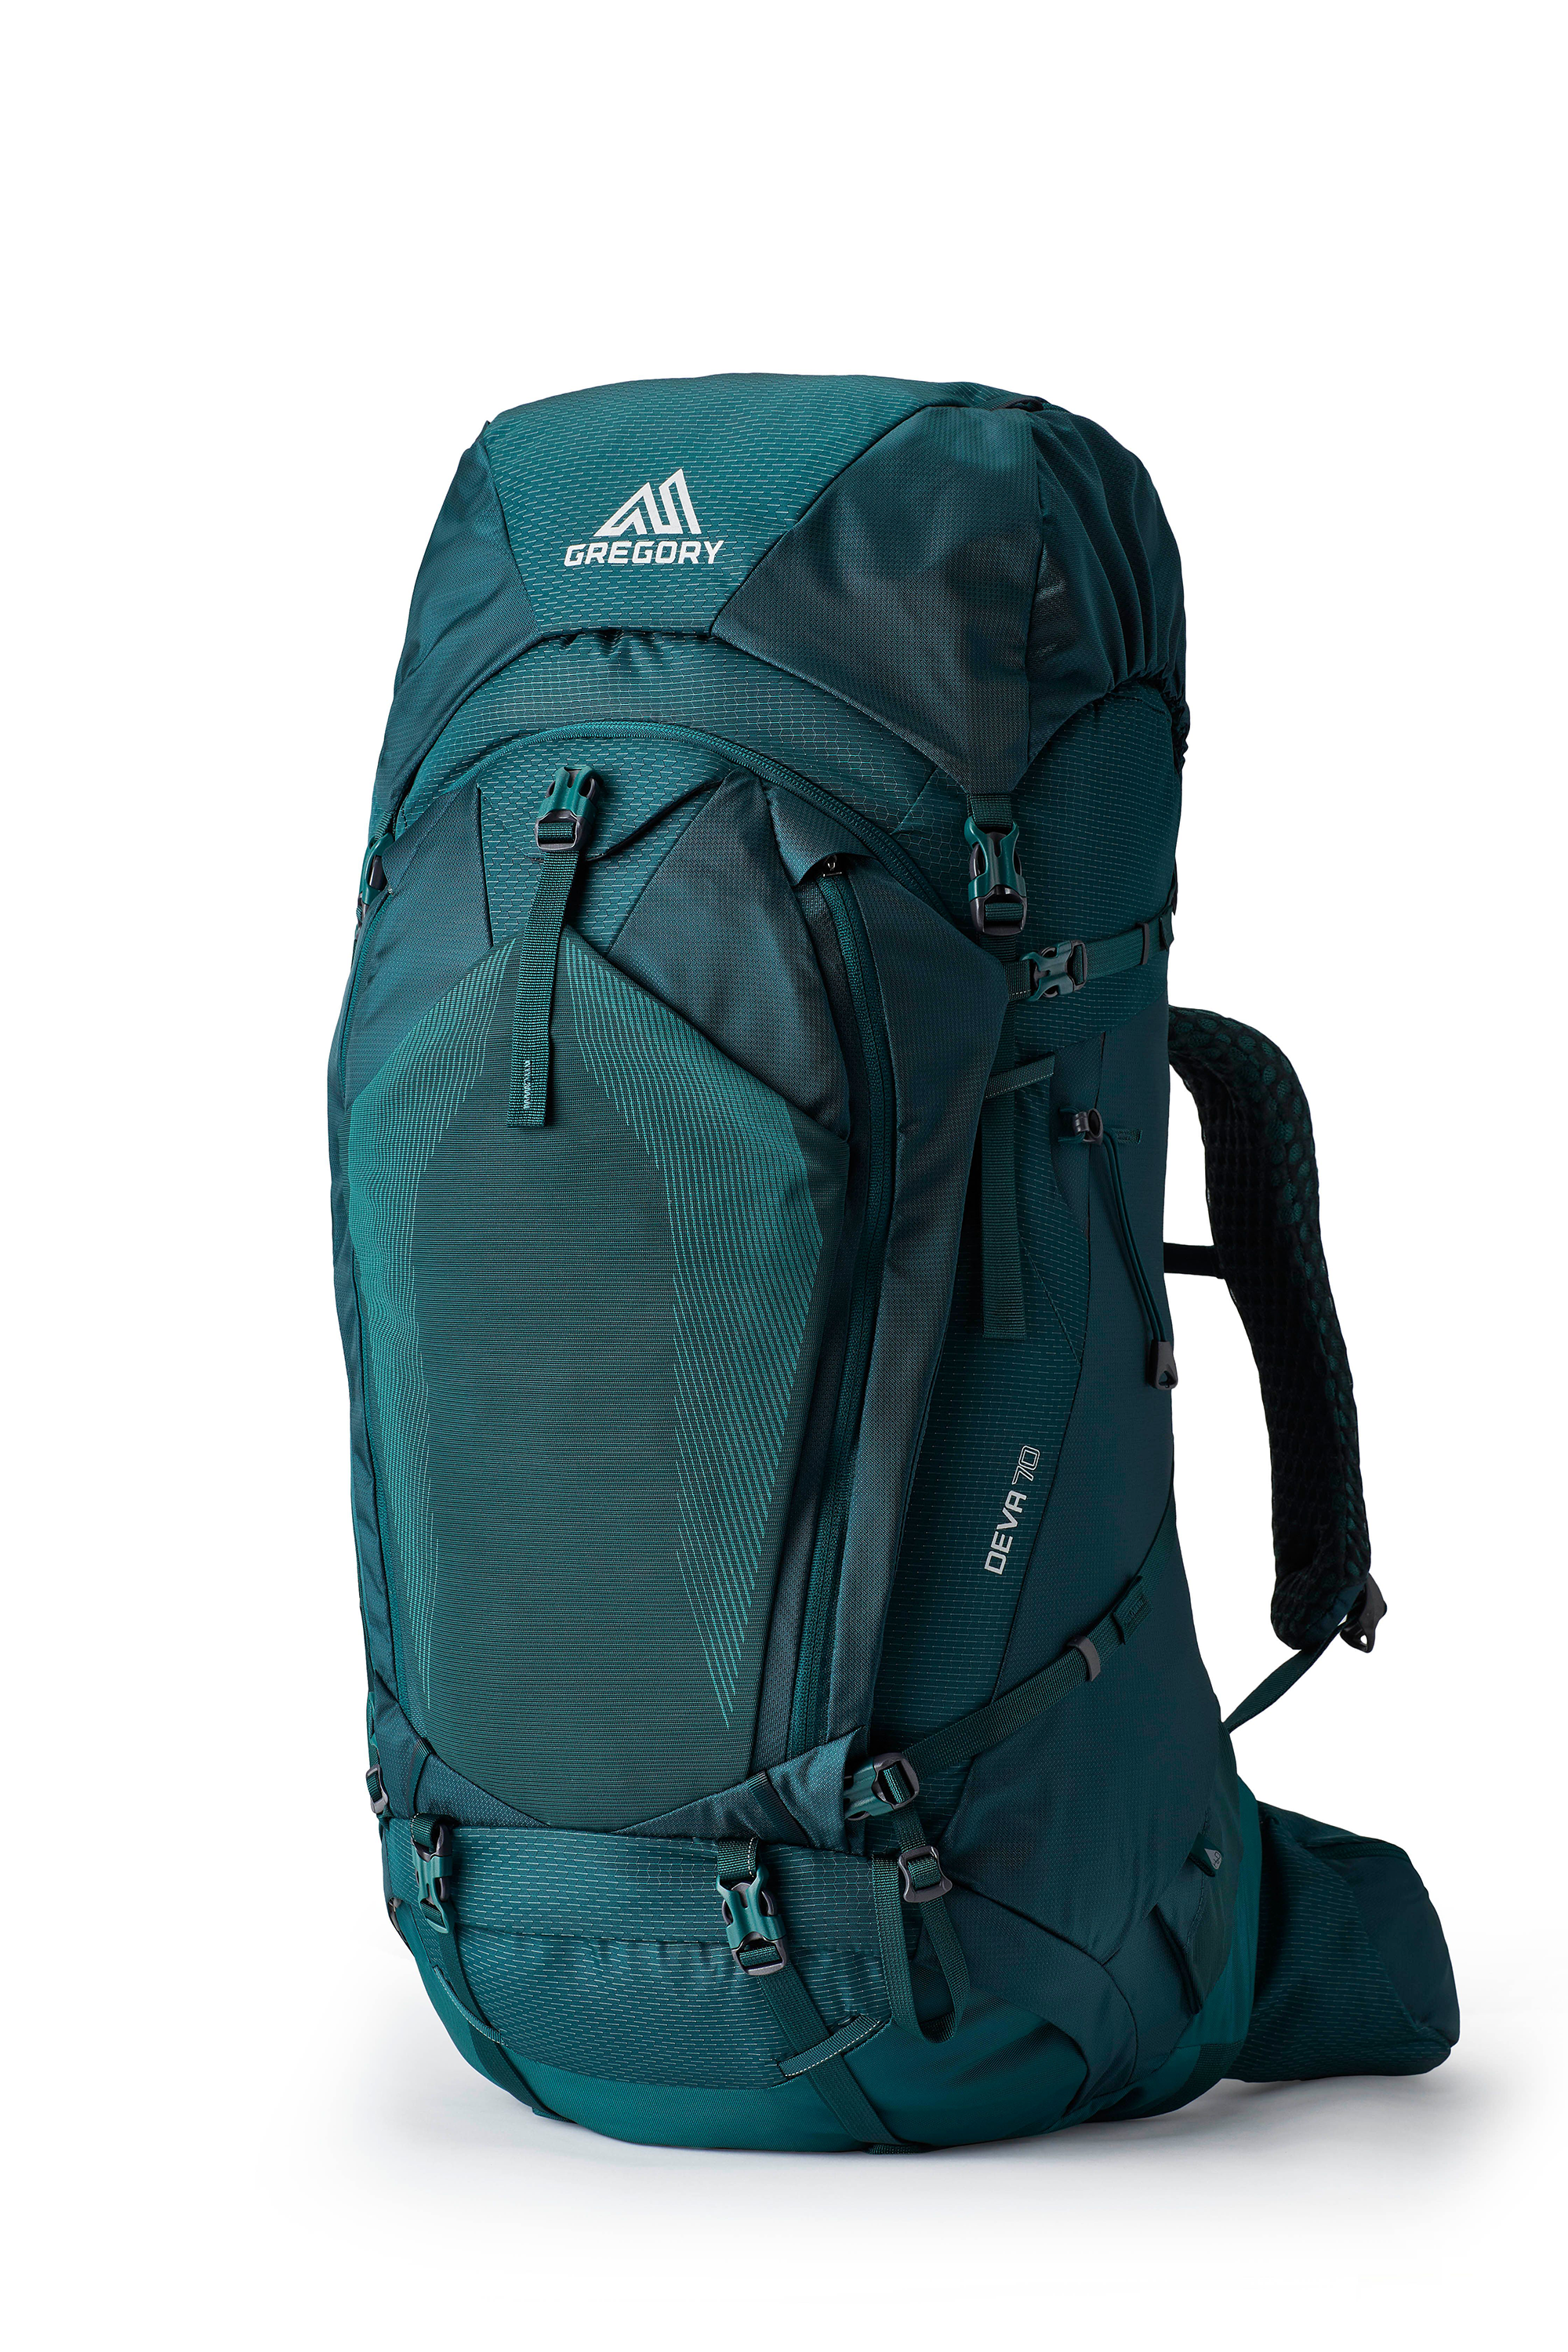 Gregory Deva 70 Backpack for Ladies - Emerald Green - S